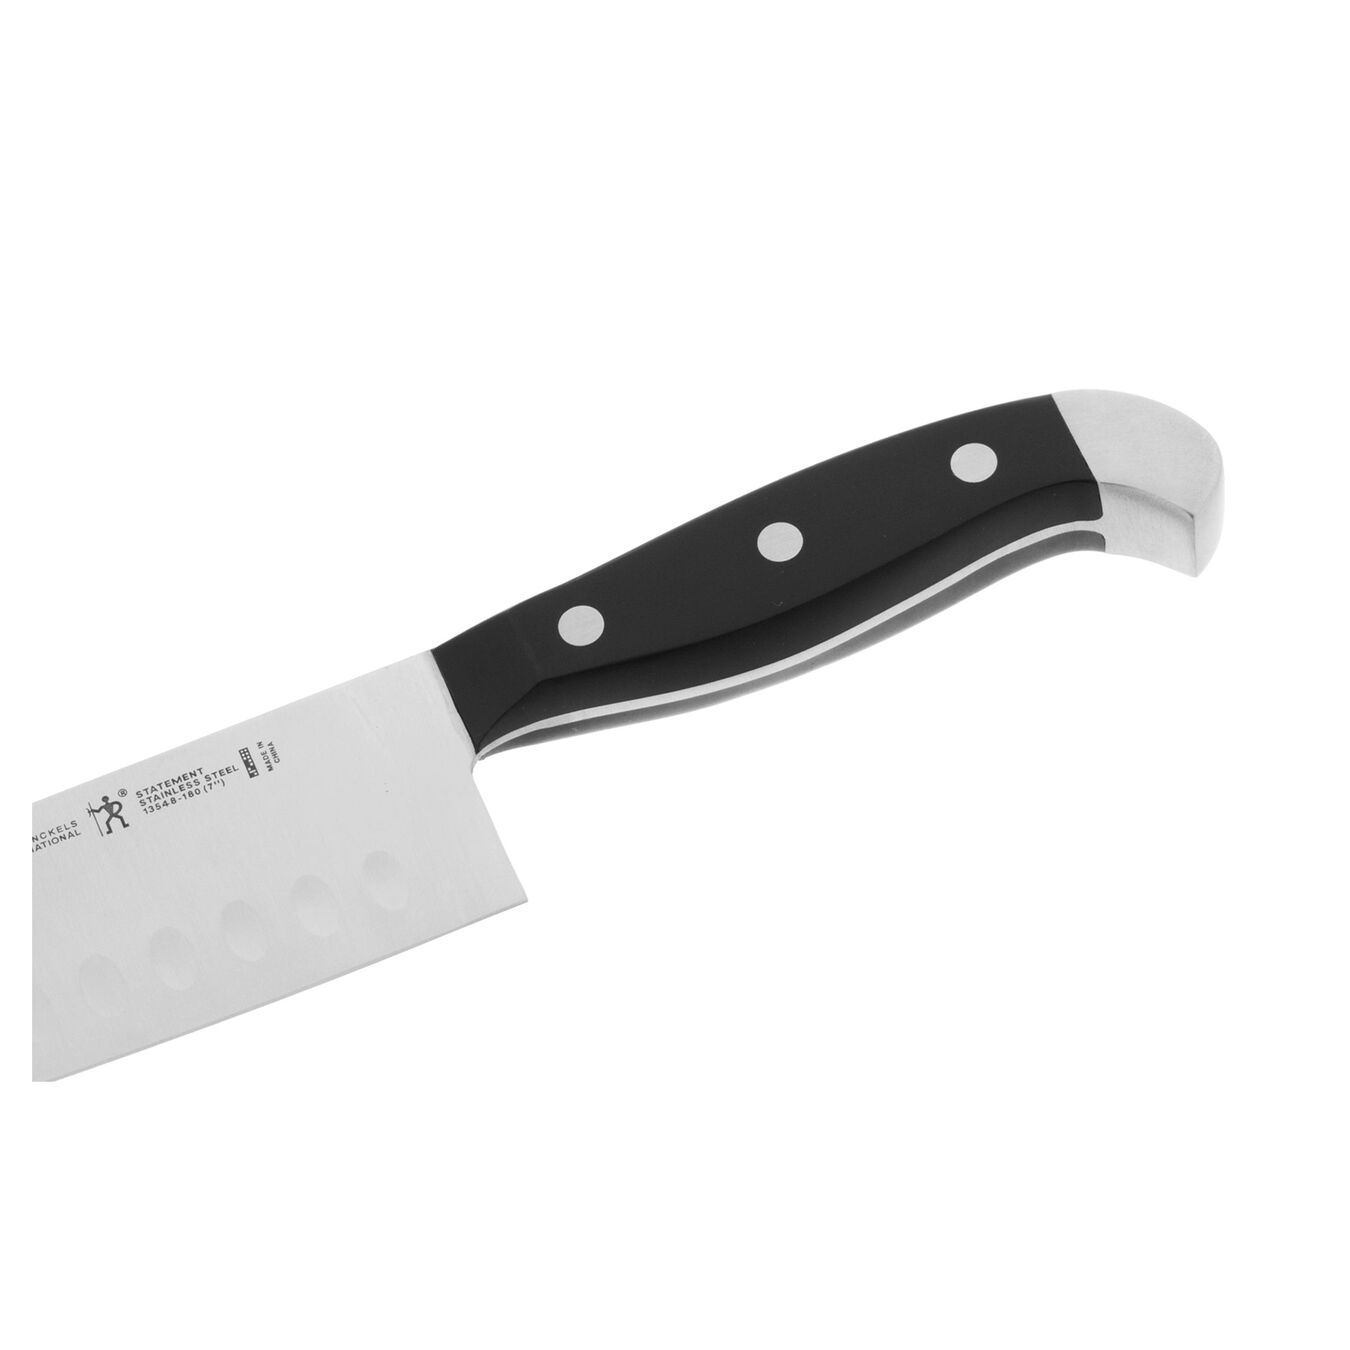 7-inch, Hollow Edge Santoku Knife,,large 5